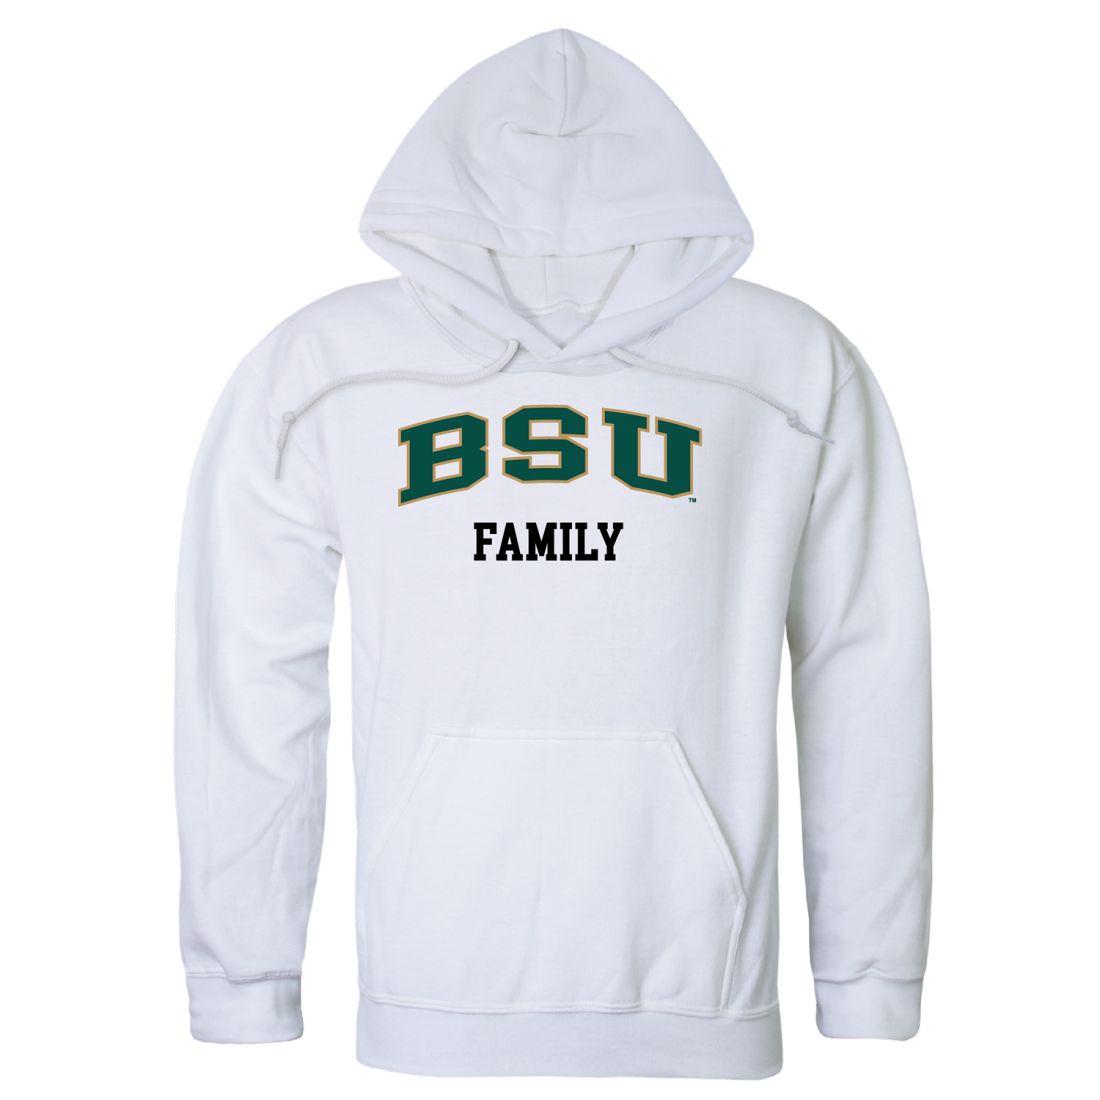 BSU Bemidji State University Beavers Family Hoodie Sweatshirts